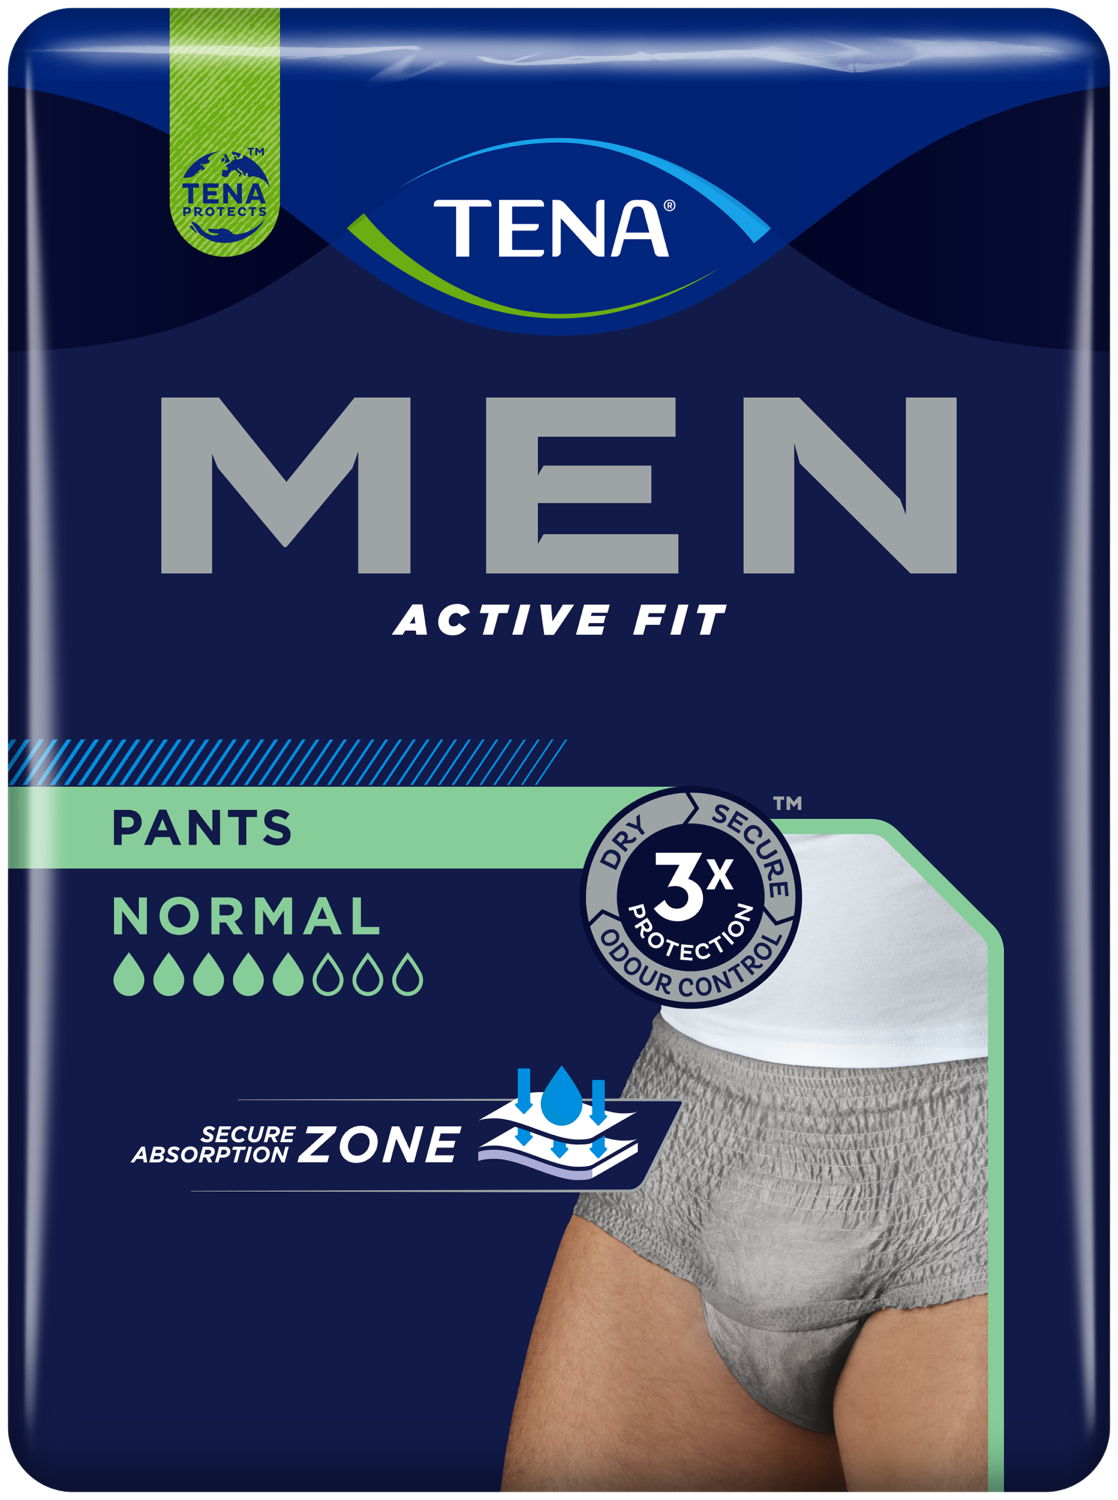 Tena Men Active Fit Pants Normal grau